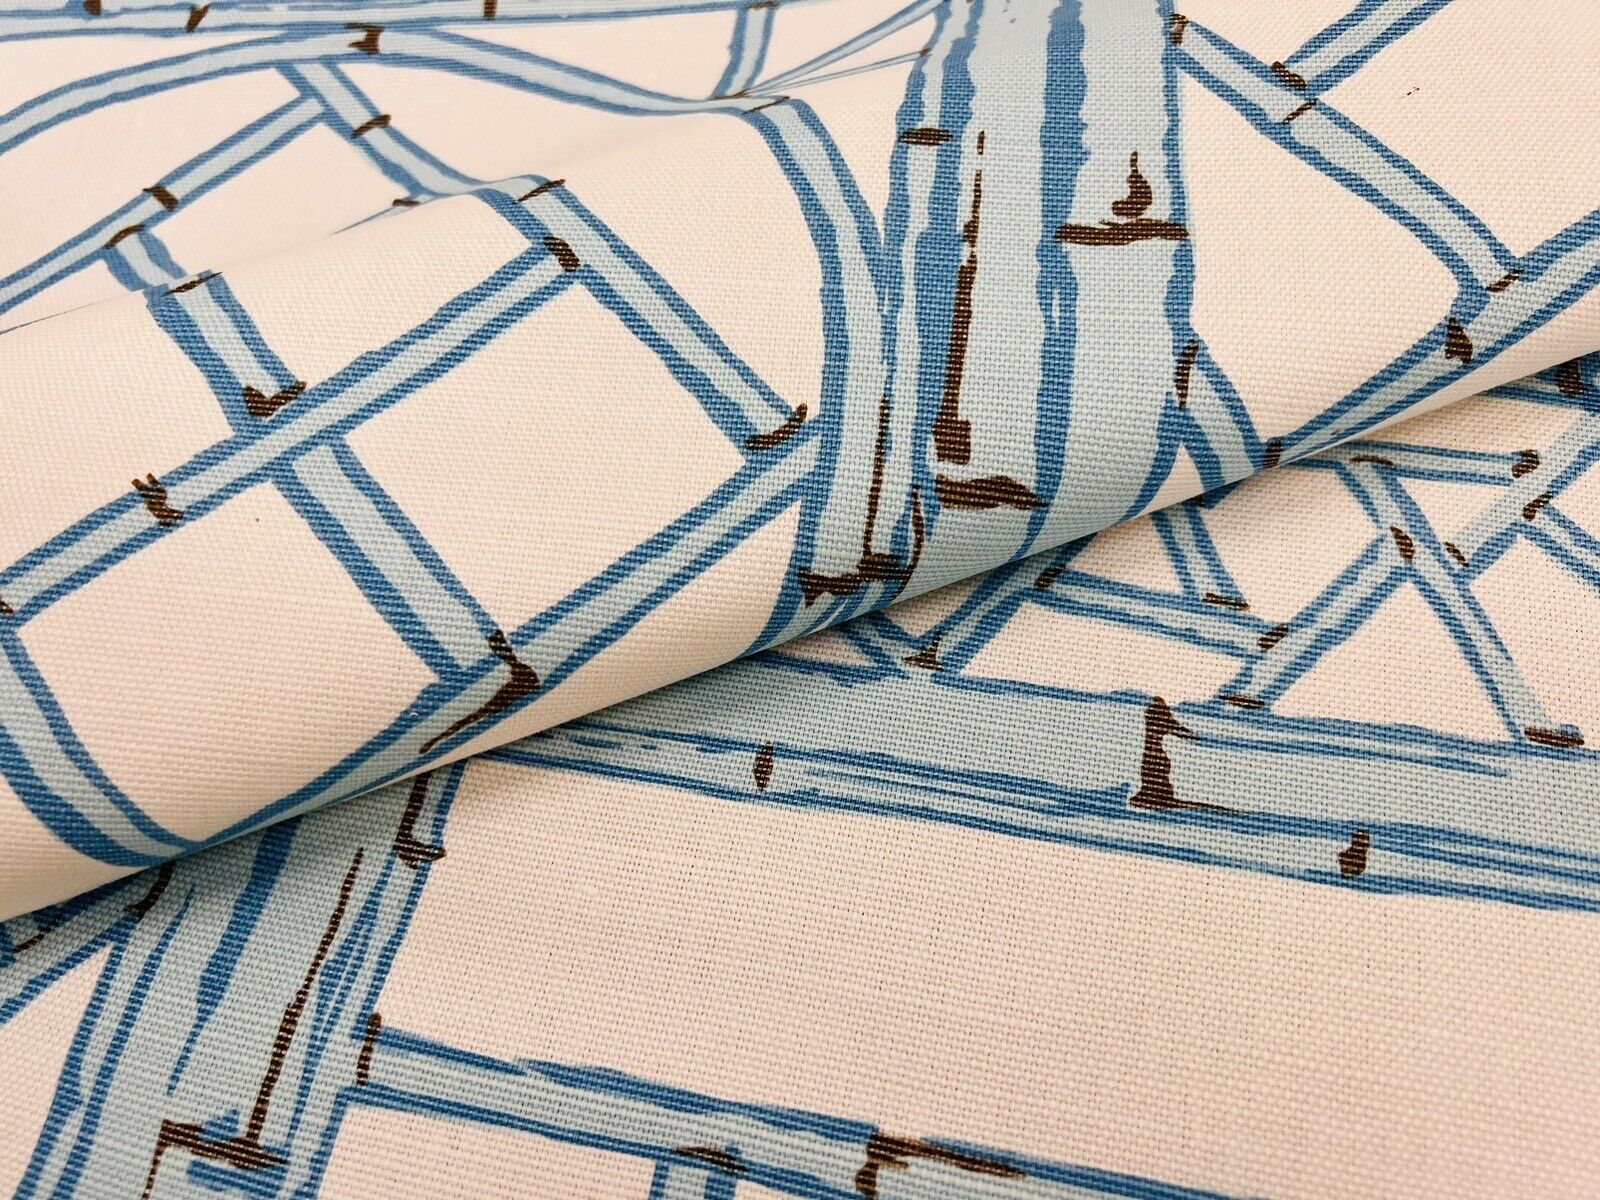 China Seas Bamboo Print Fabric- Lyford Trellis / Lt. Blue French Brown 0.75 yds